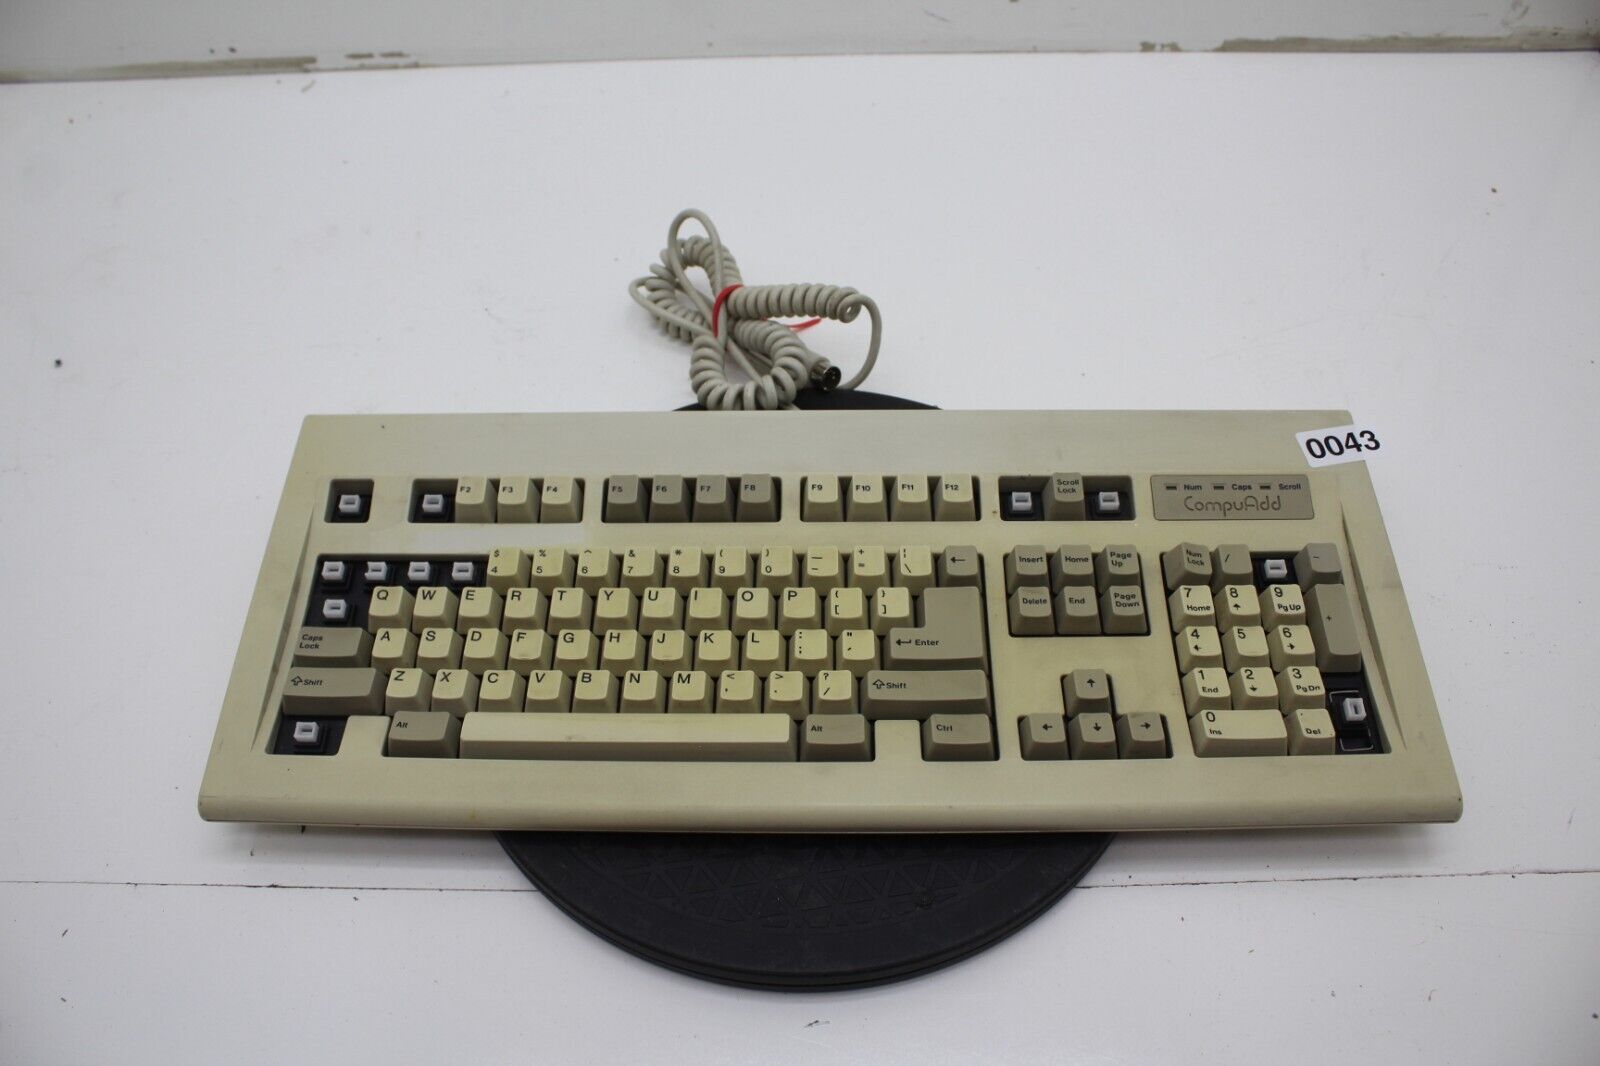 Compuadd DIN Keyboard 119240-001 REV. C - Missing key caps